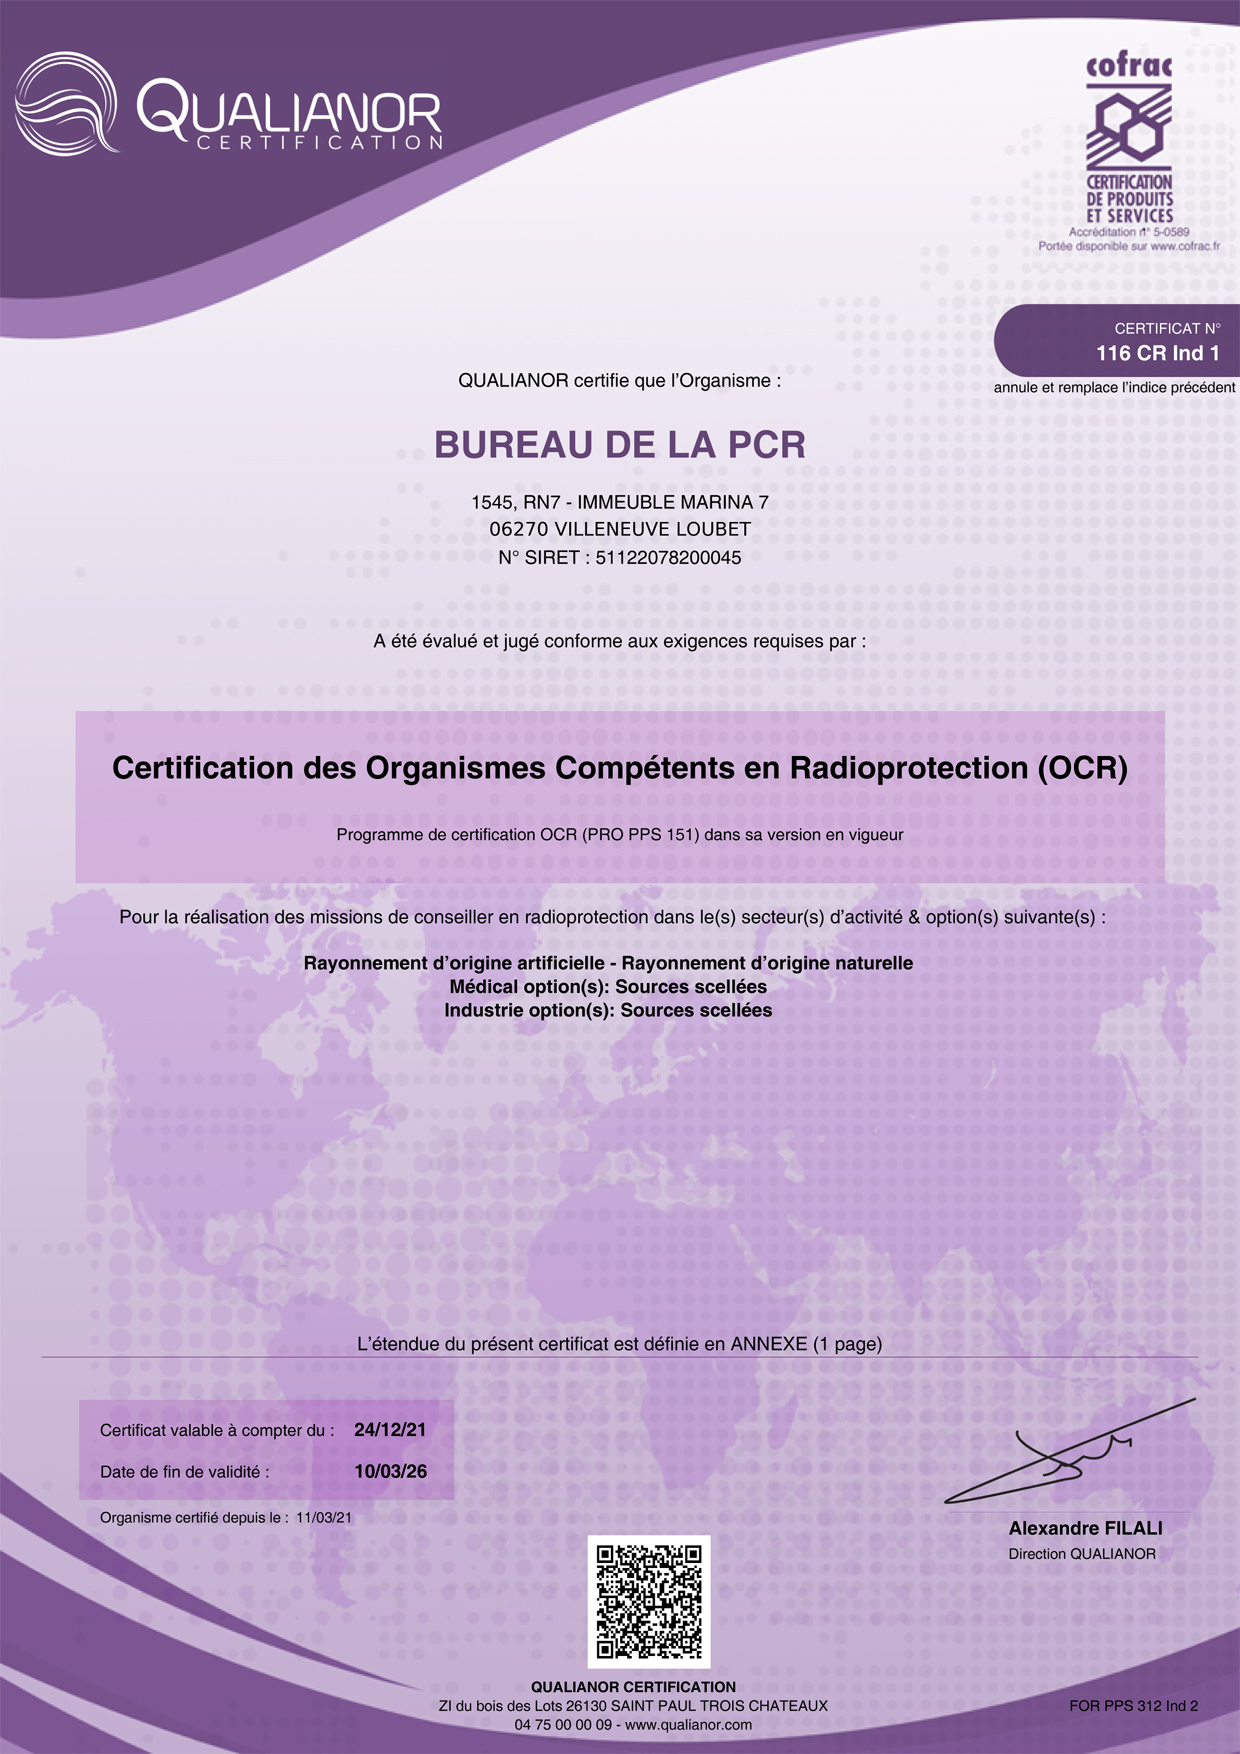 Certification Qualianor Organisme Compétent en Radioprotection